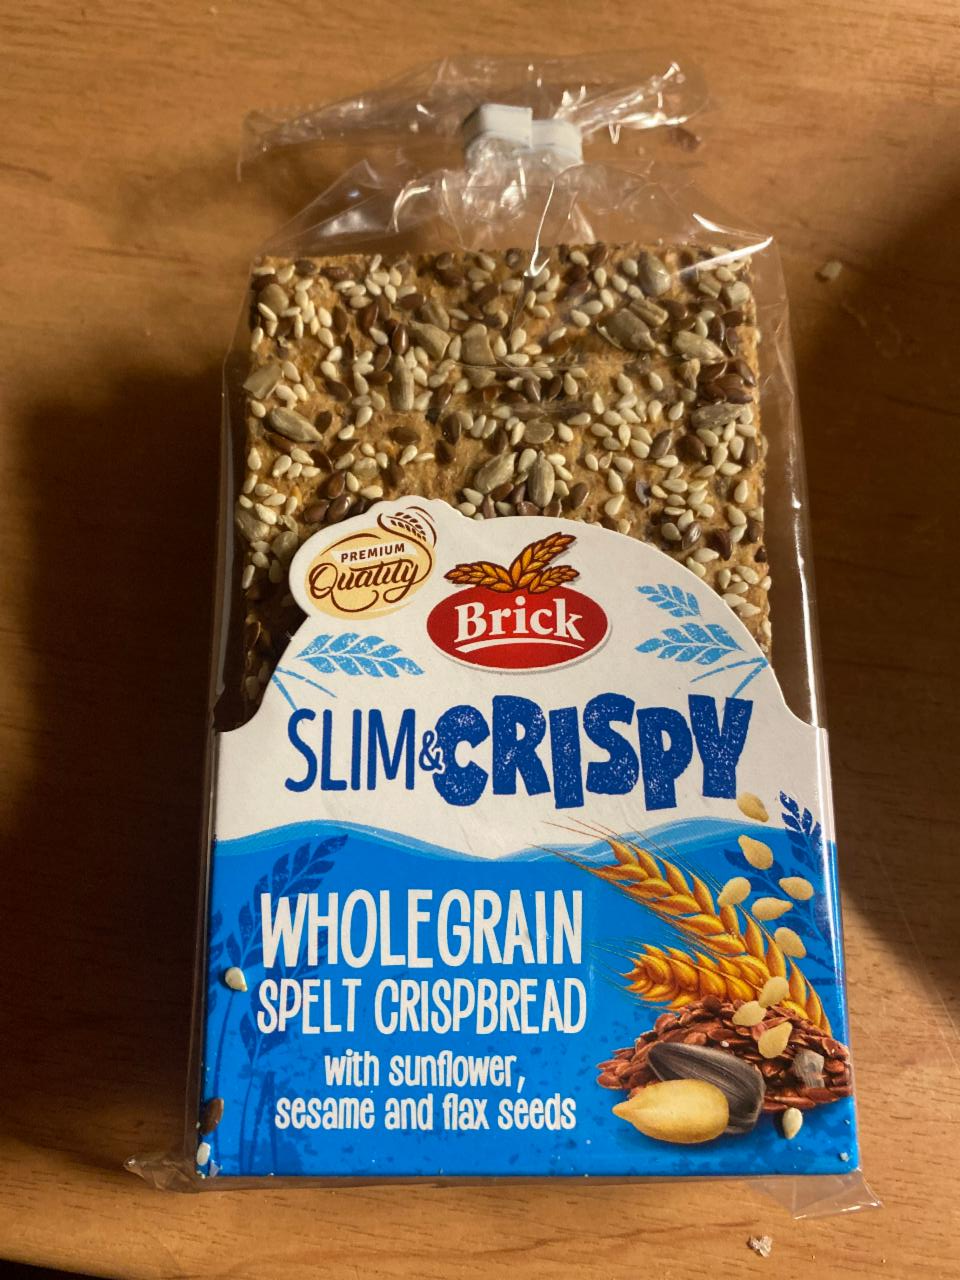 Fotografie - SLIM&CRISPY Wholegrain spelt crispbread Brick